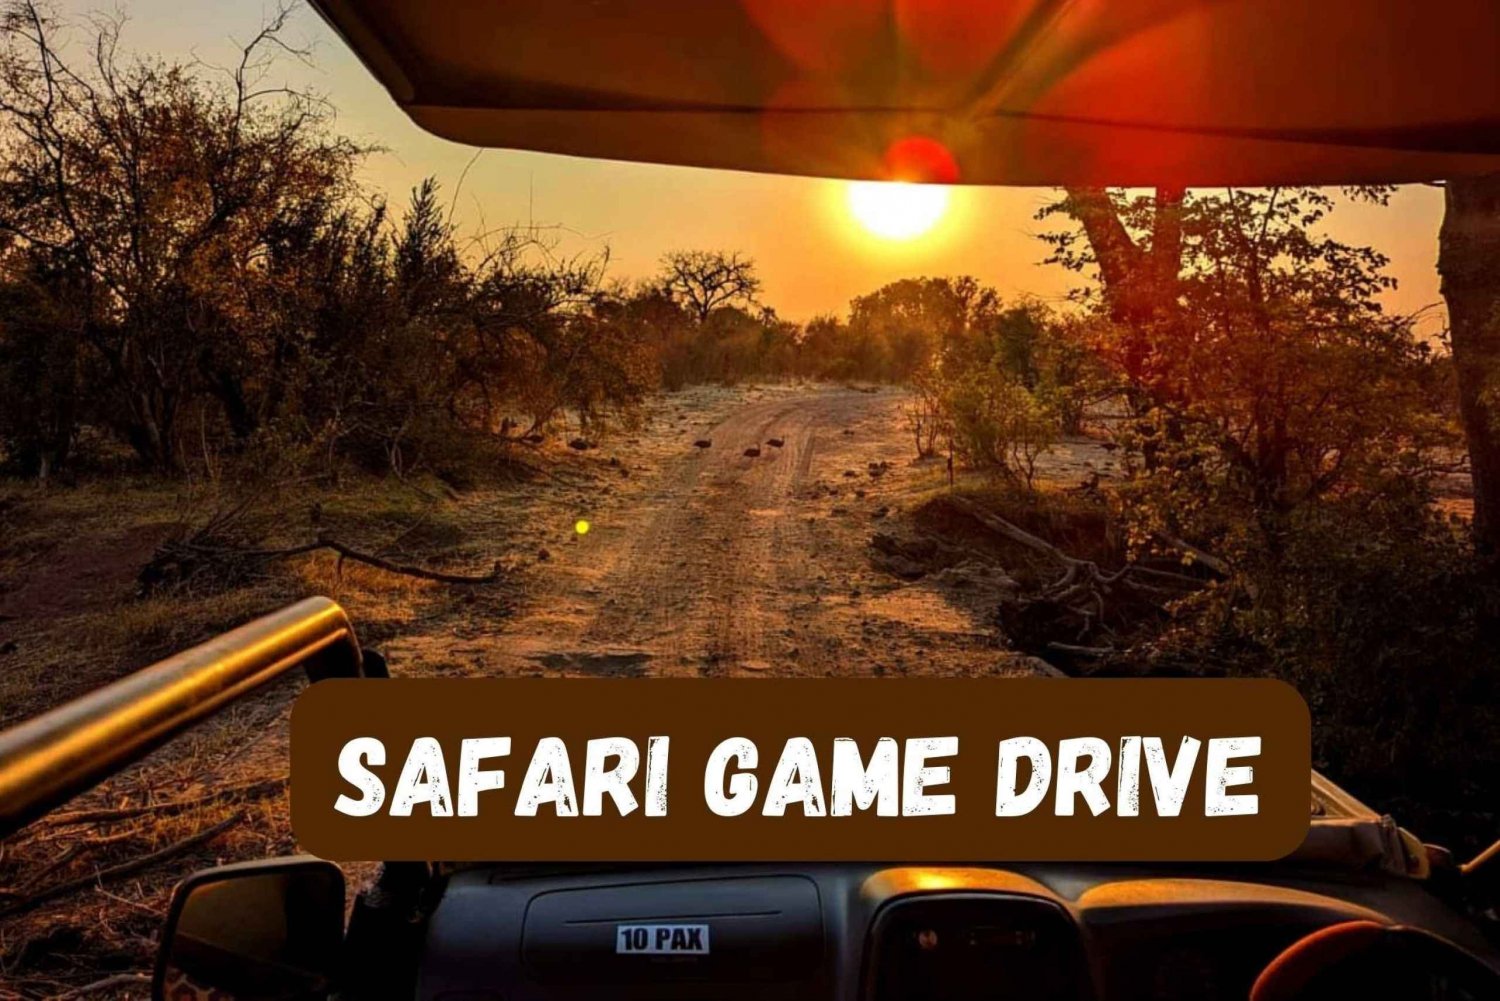 Victoria Watervallen: Safari gamedrive